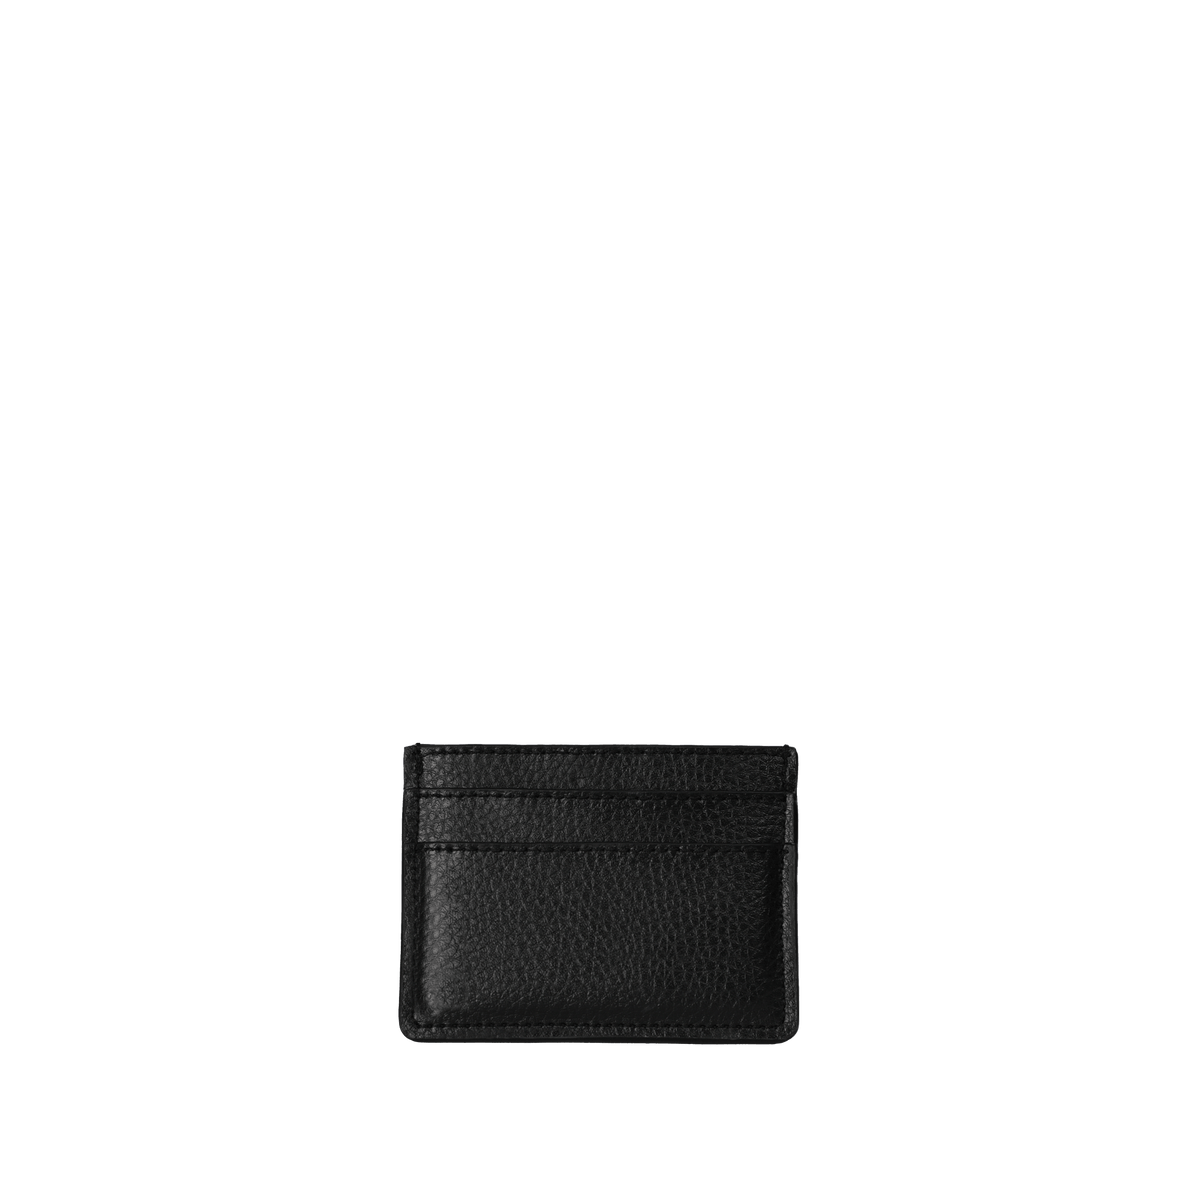 Penny - Black Edition Vegan Mirum Leather Cardholder